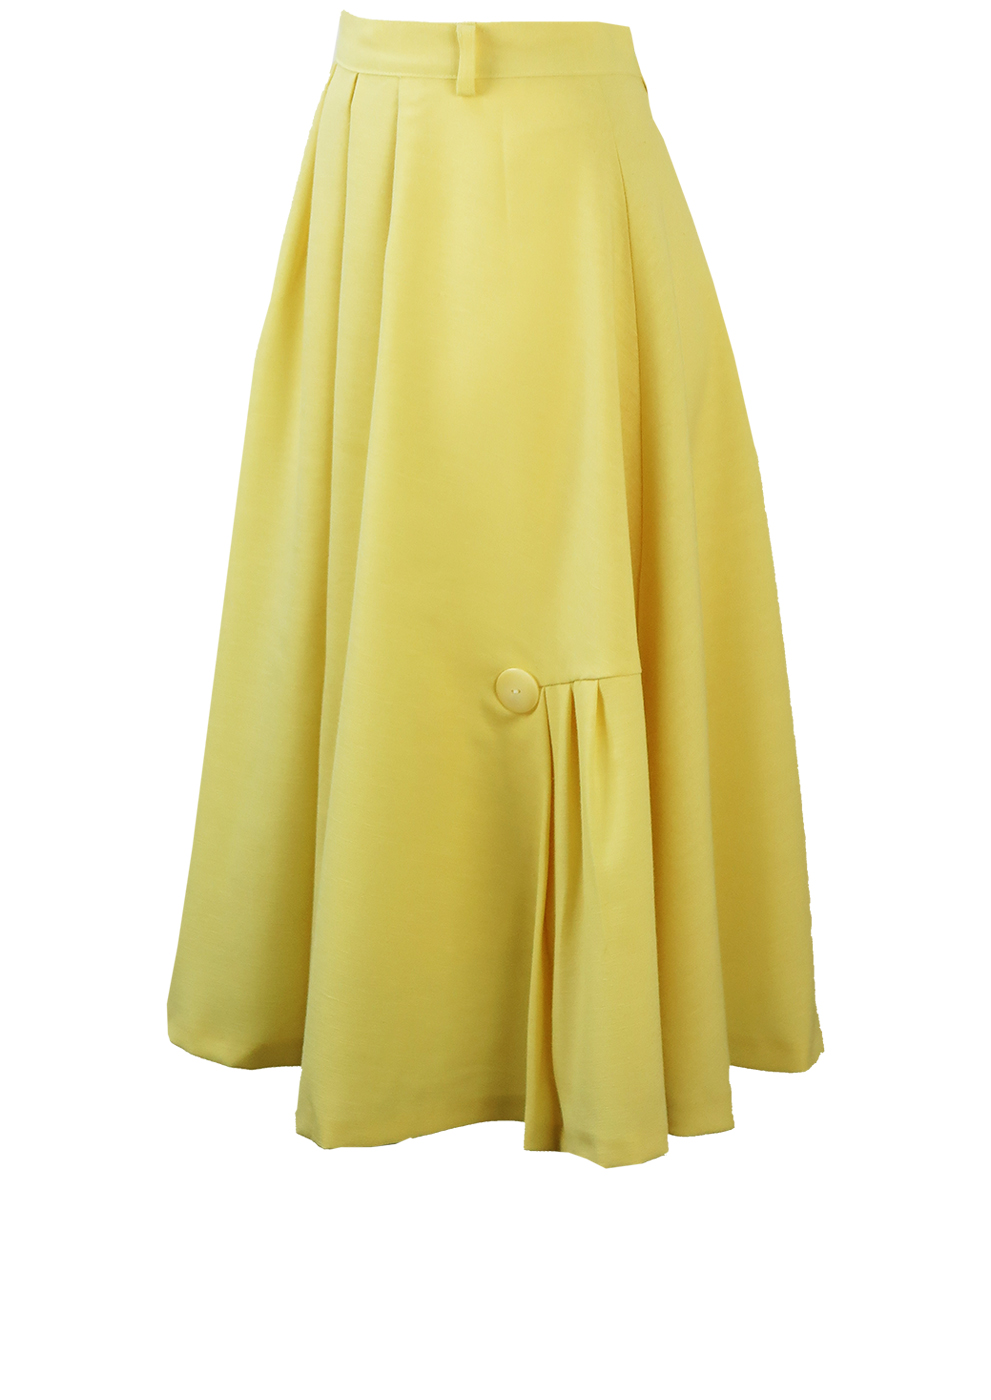 Vintage 80's Lemon Yellow Midi Flared Skirt with Pleat Detail - XS/S ...